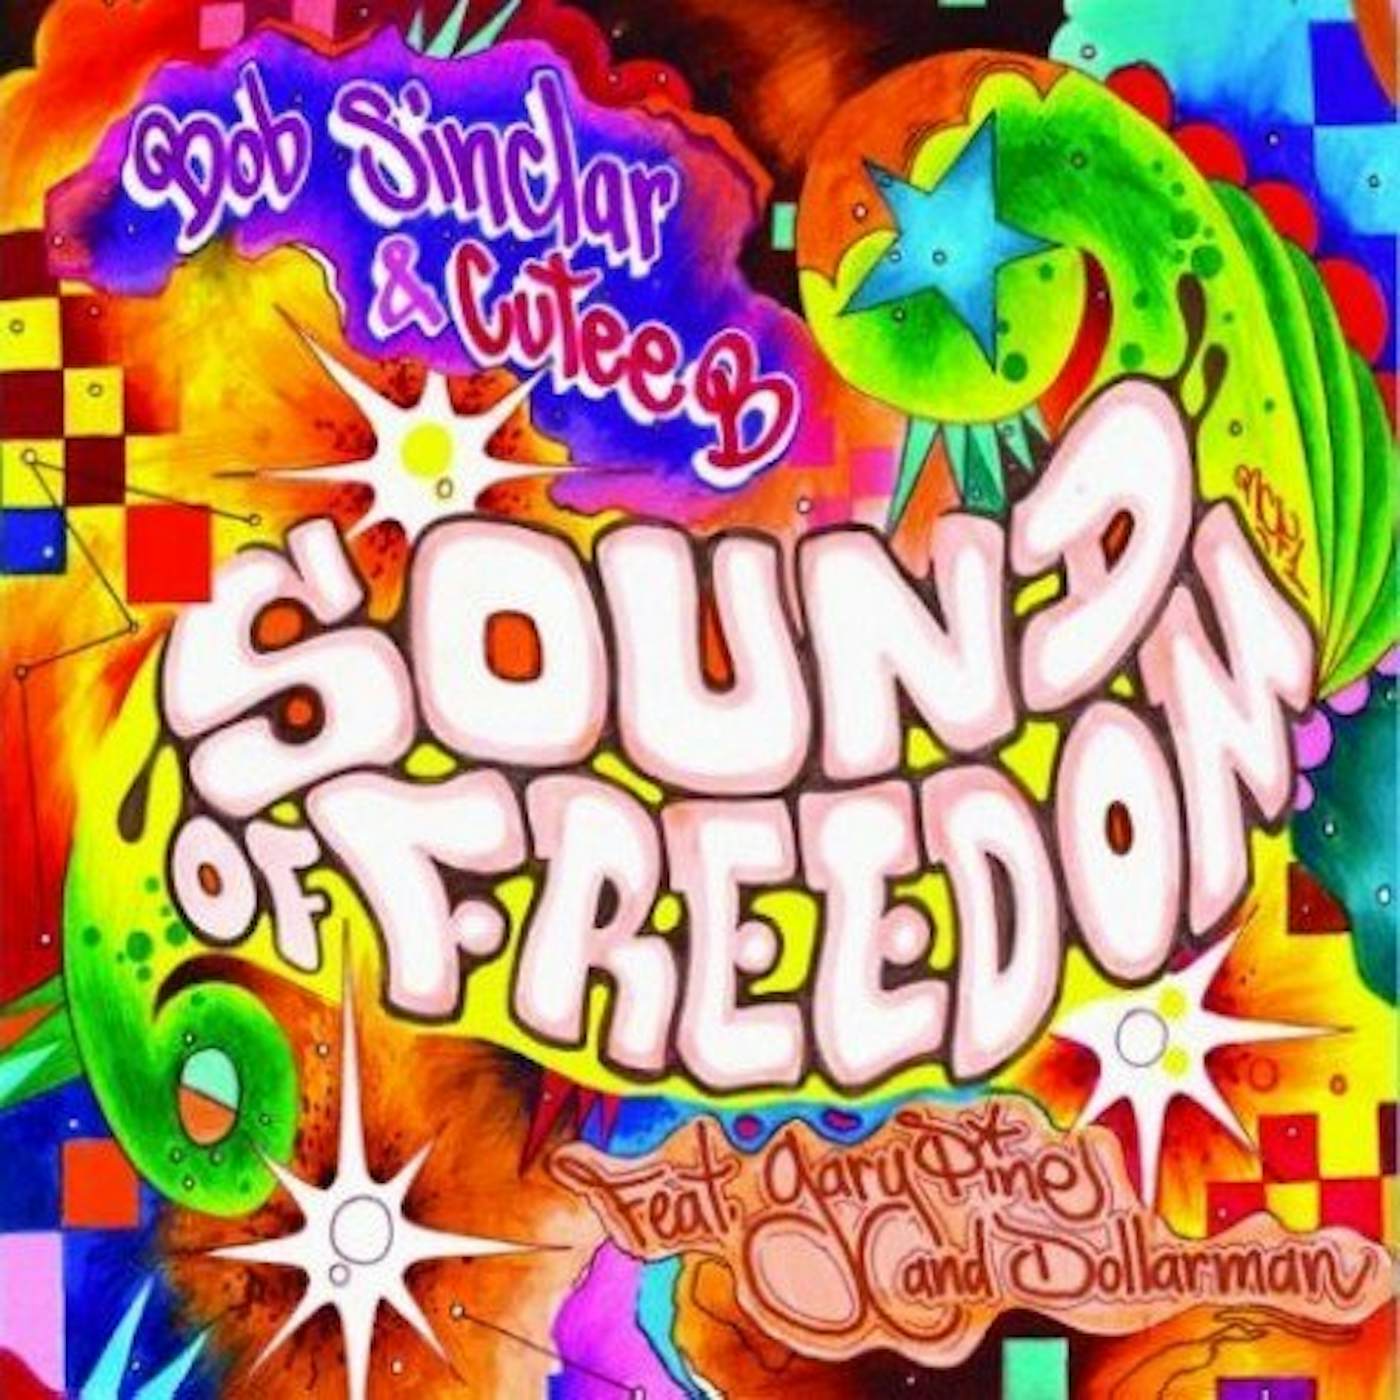 Bob Sinclar & Cutee B SOUND OF FREEDOM Vinyl Record